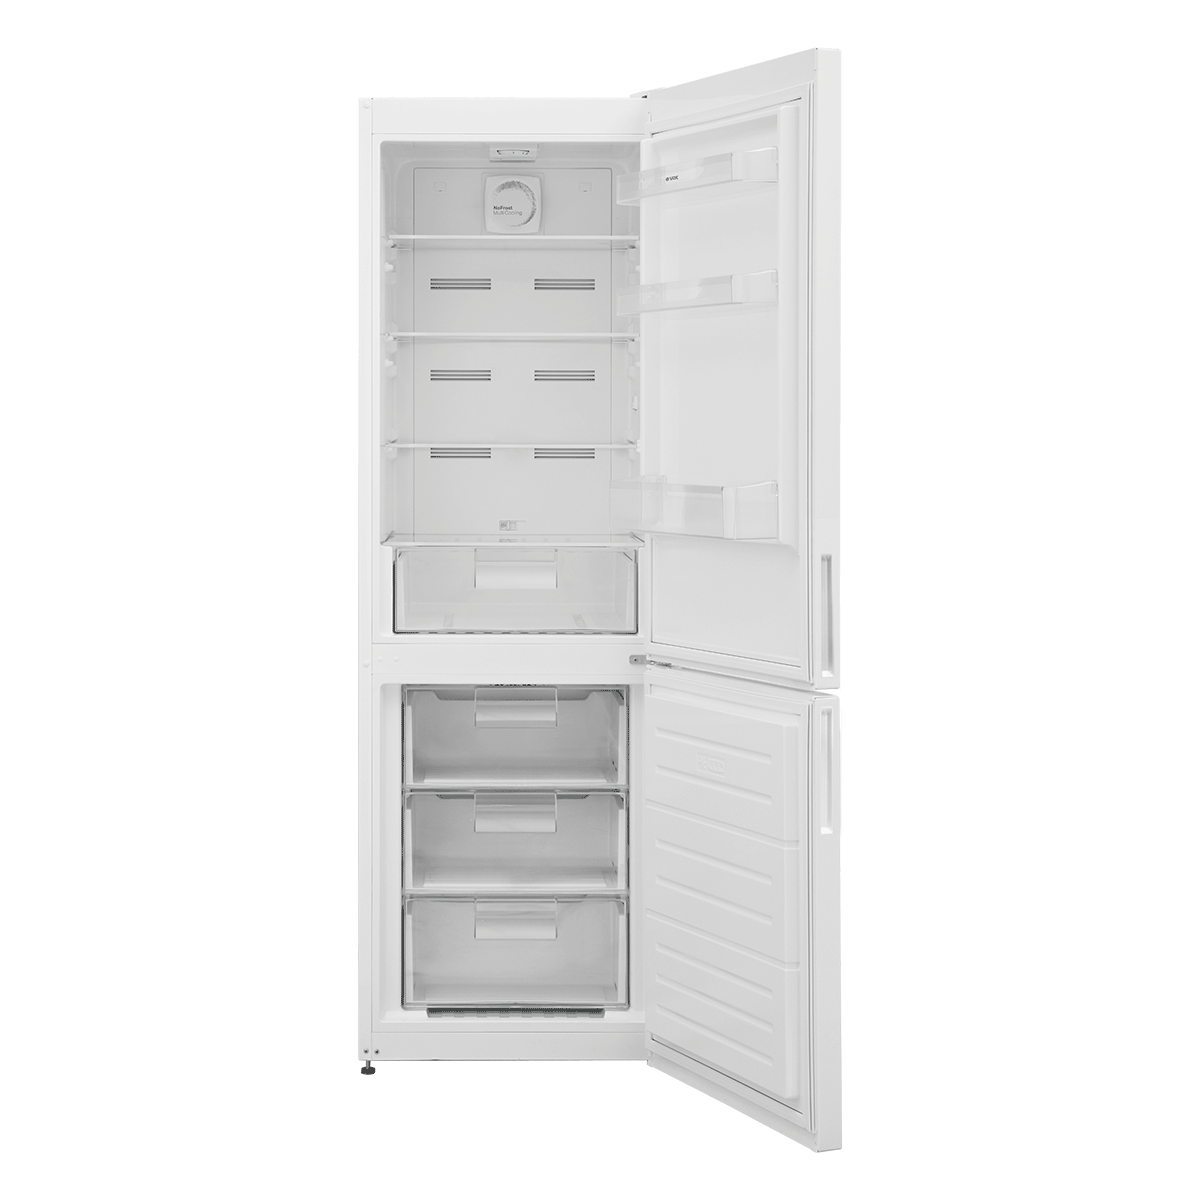 Combined refrigerator NF 3790 E 